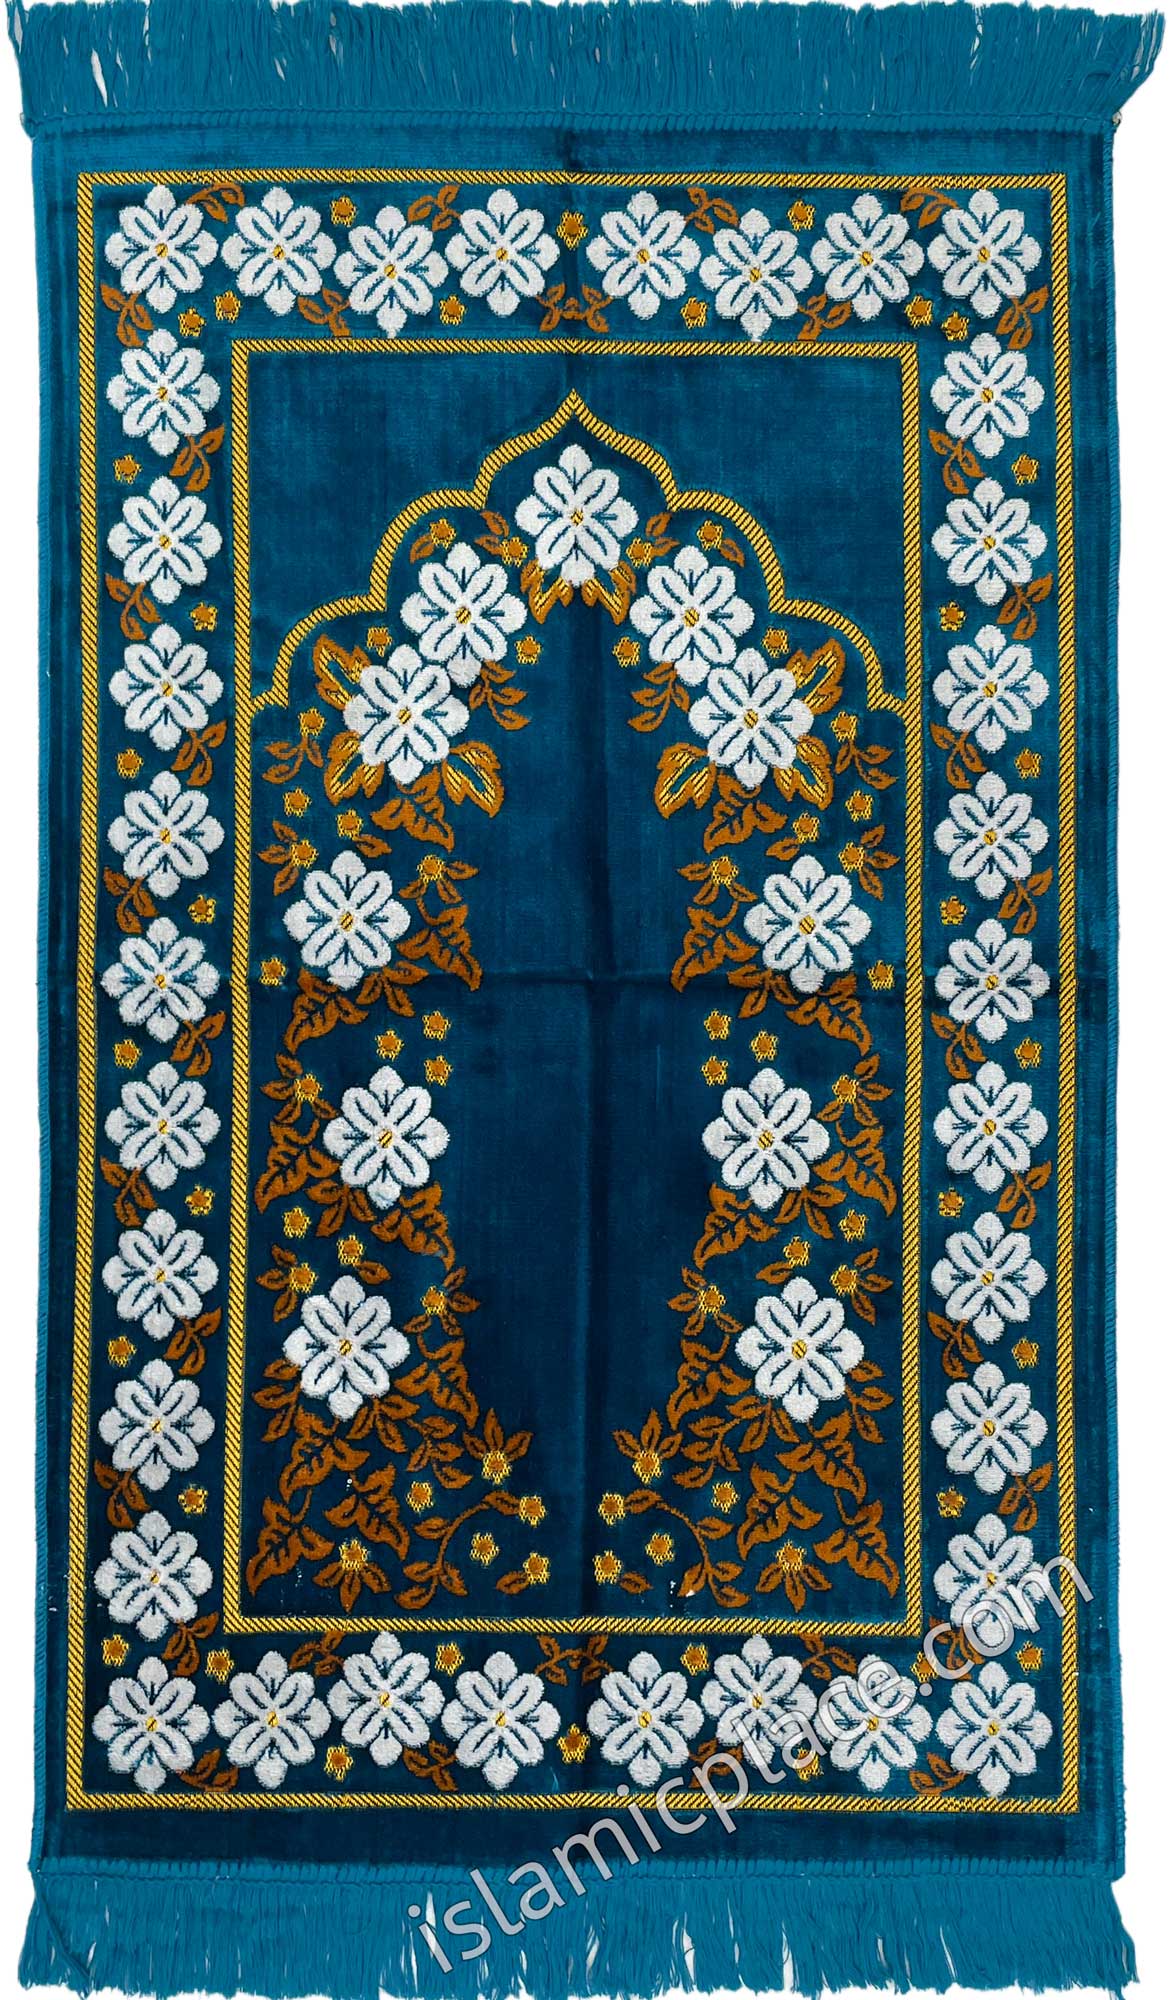 Teal Blue Prayer Rug with Floral Gateway Mihrab